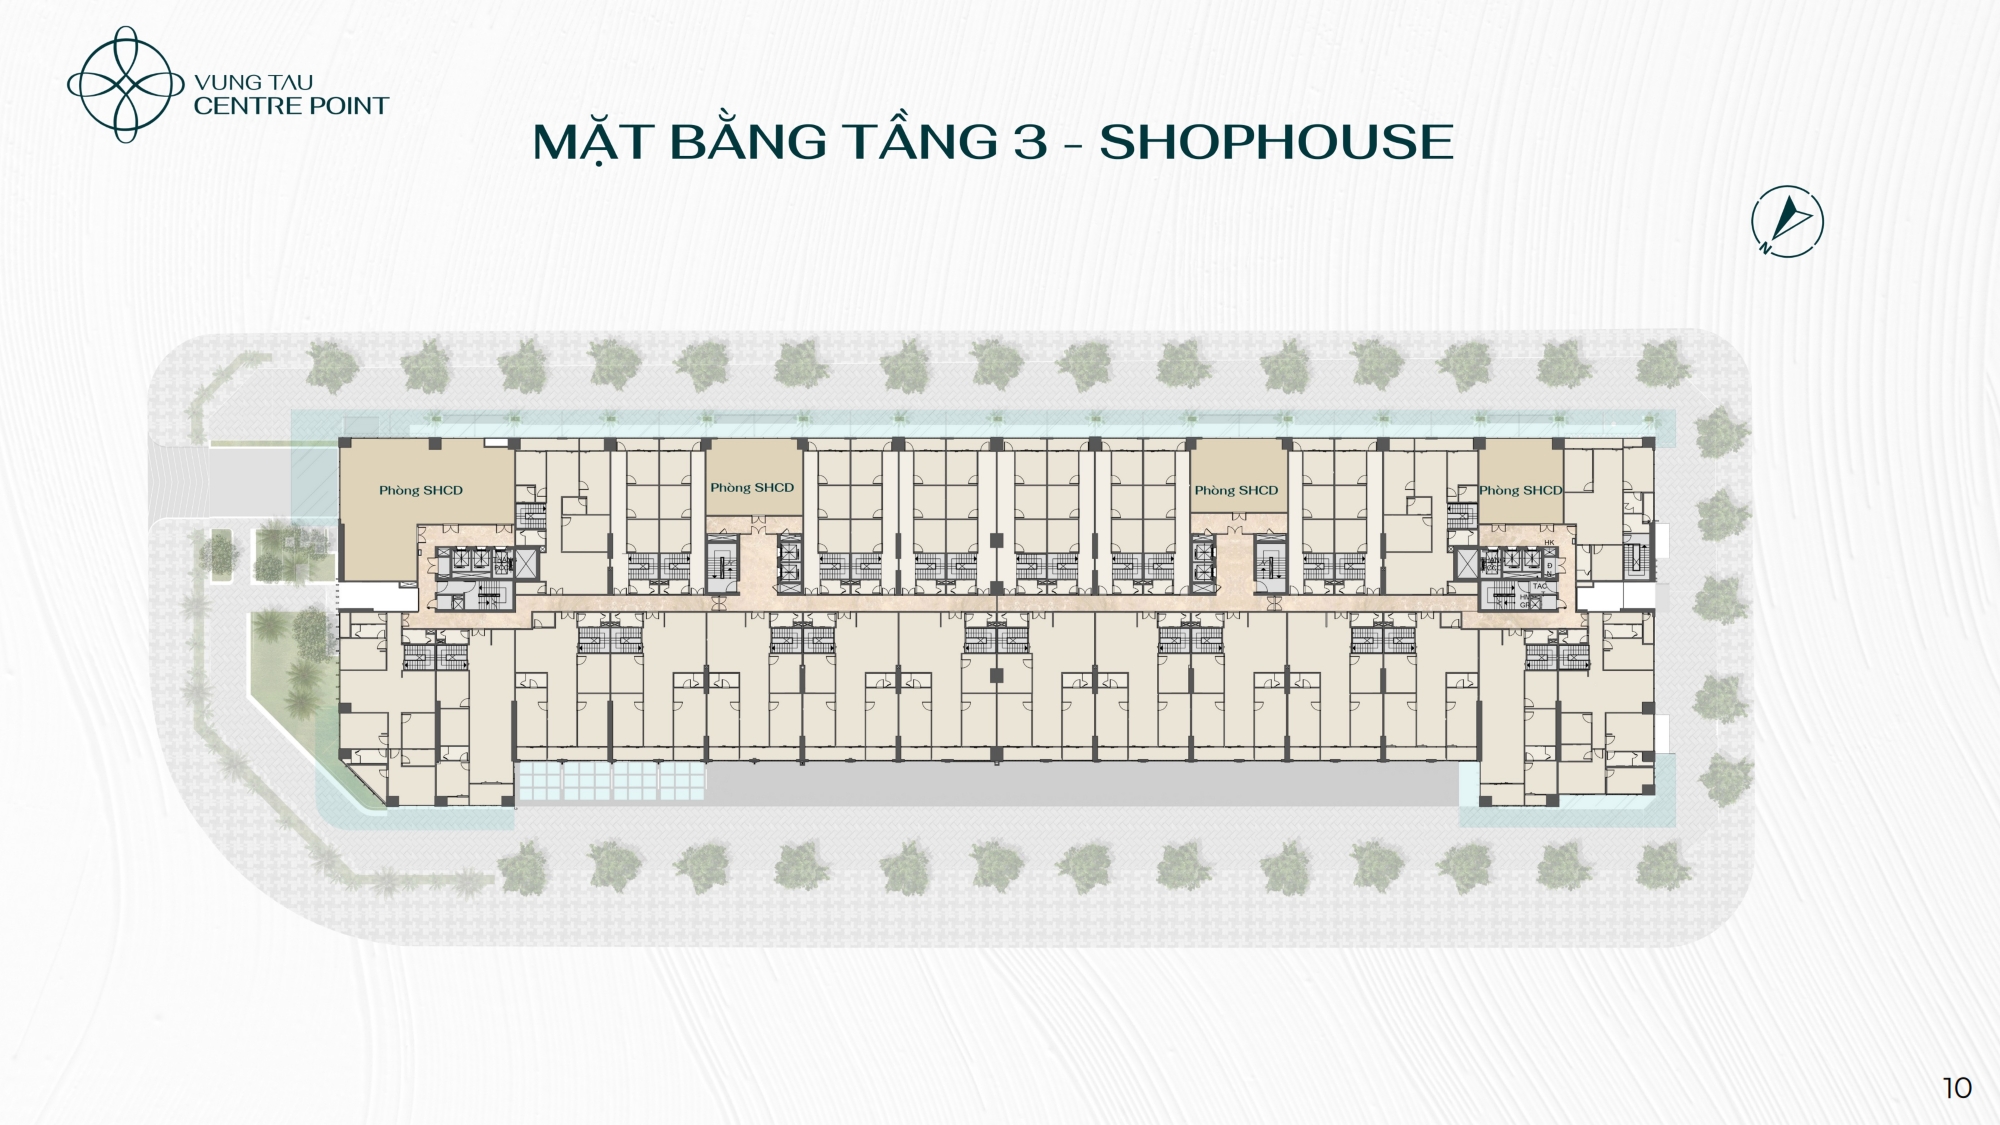 Mat bang Tang 3 Shophouse Vung Tau Centre Point - Vũng Tàu Centre Point